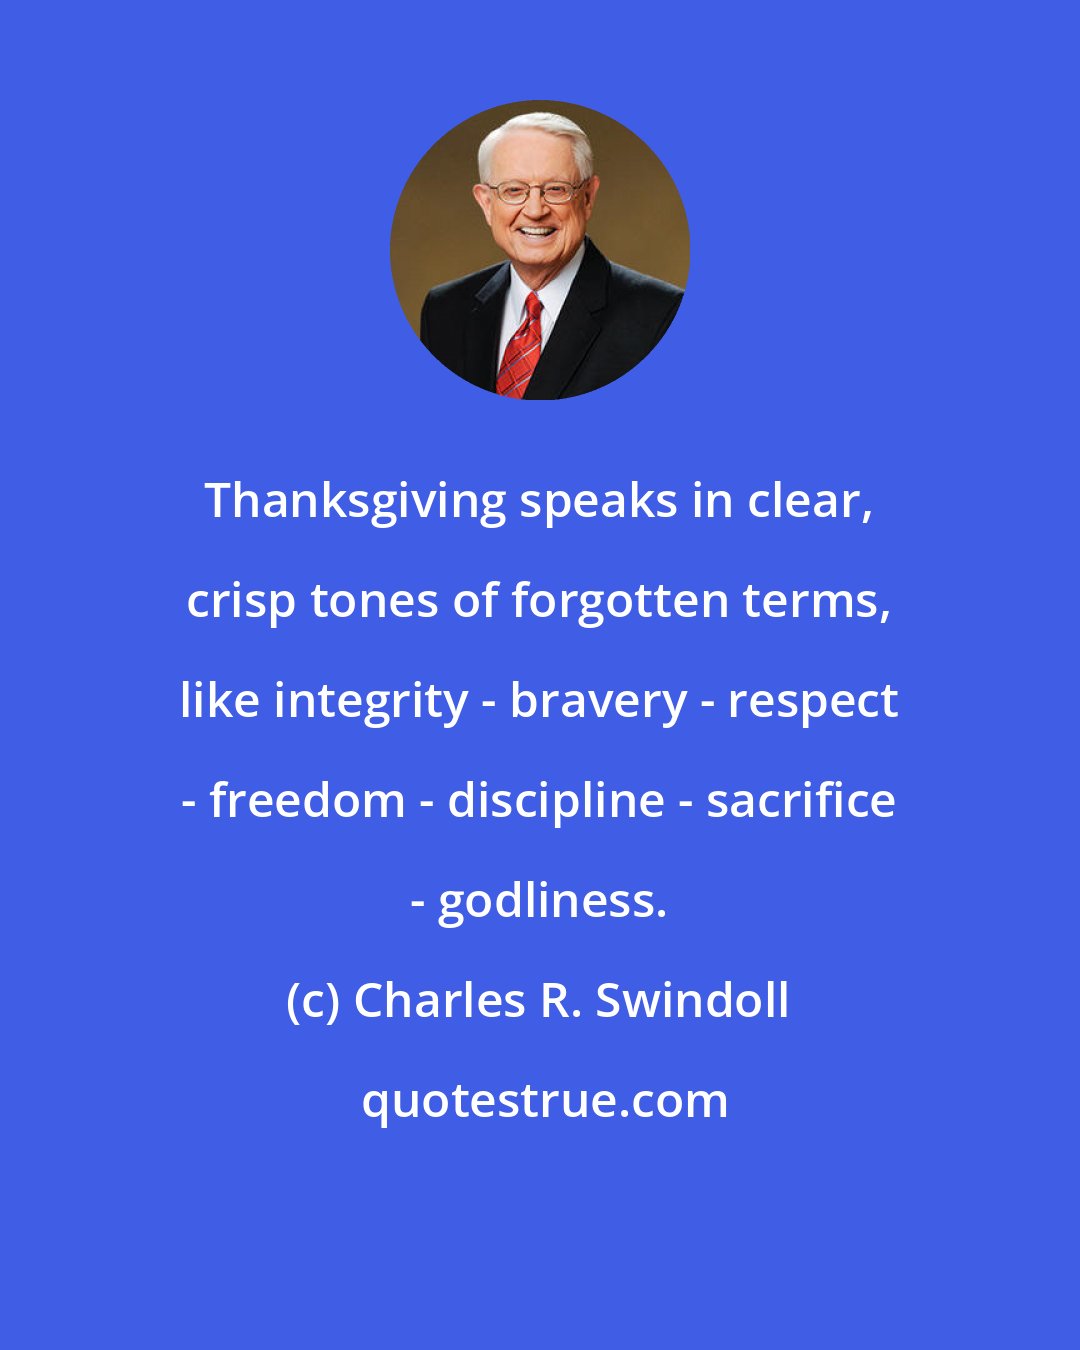 Charles R. Swindoll: Thanksgiving speaks in clear, crisp tones of forgotten terms, like integrity - bravery - respect - freedom - discipline - sacrifice - godliness.